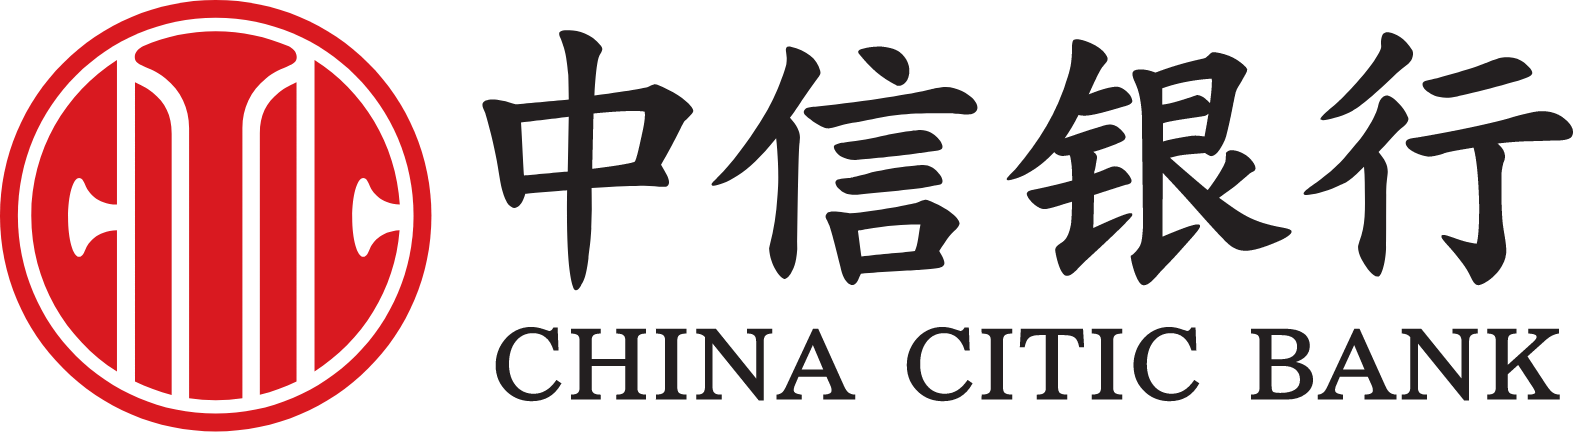 CITIC Bank logo large (transparent PNG)